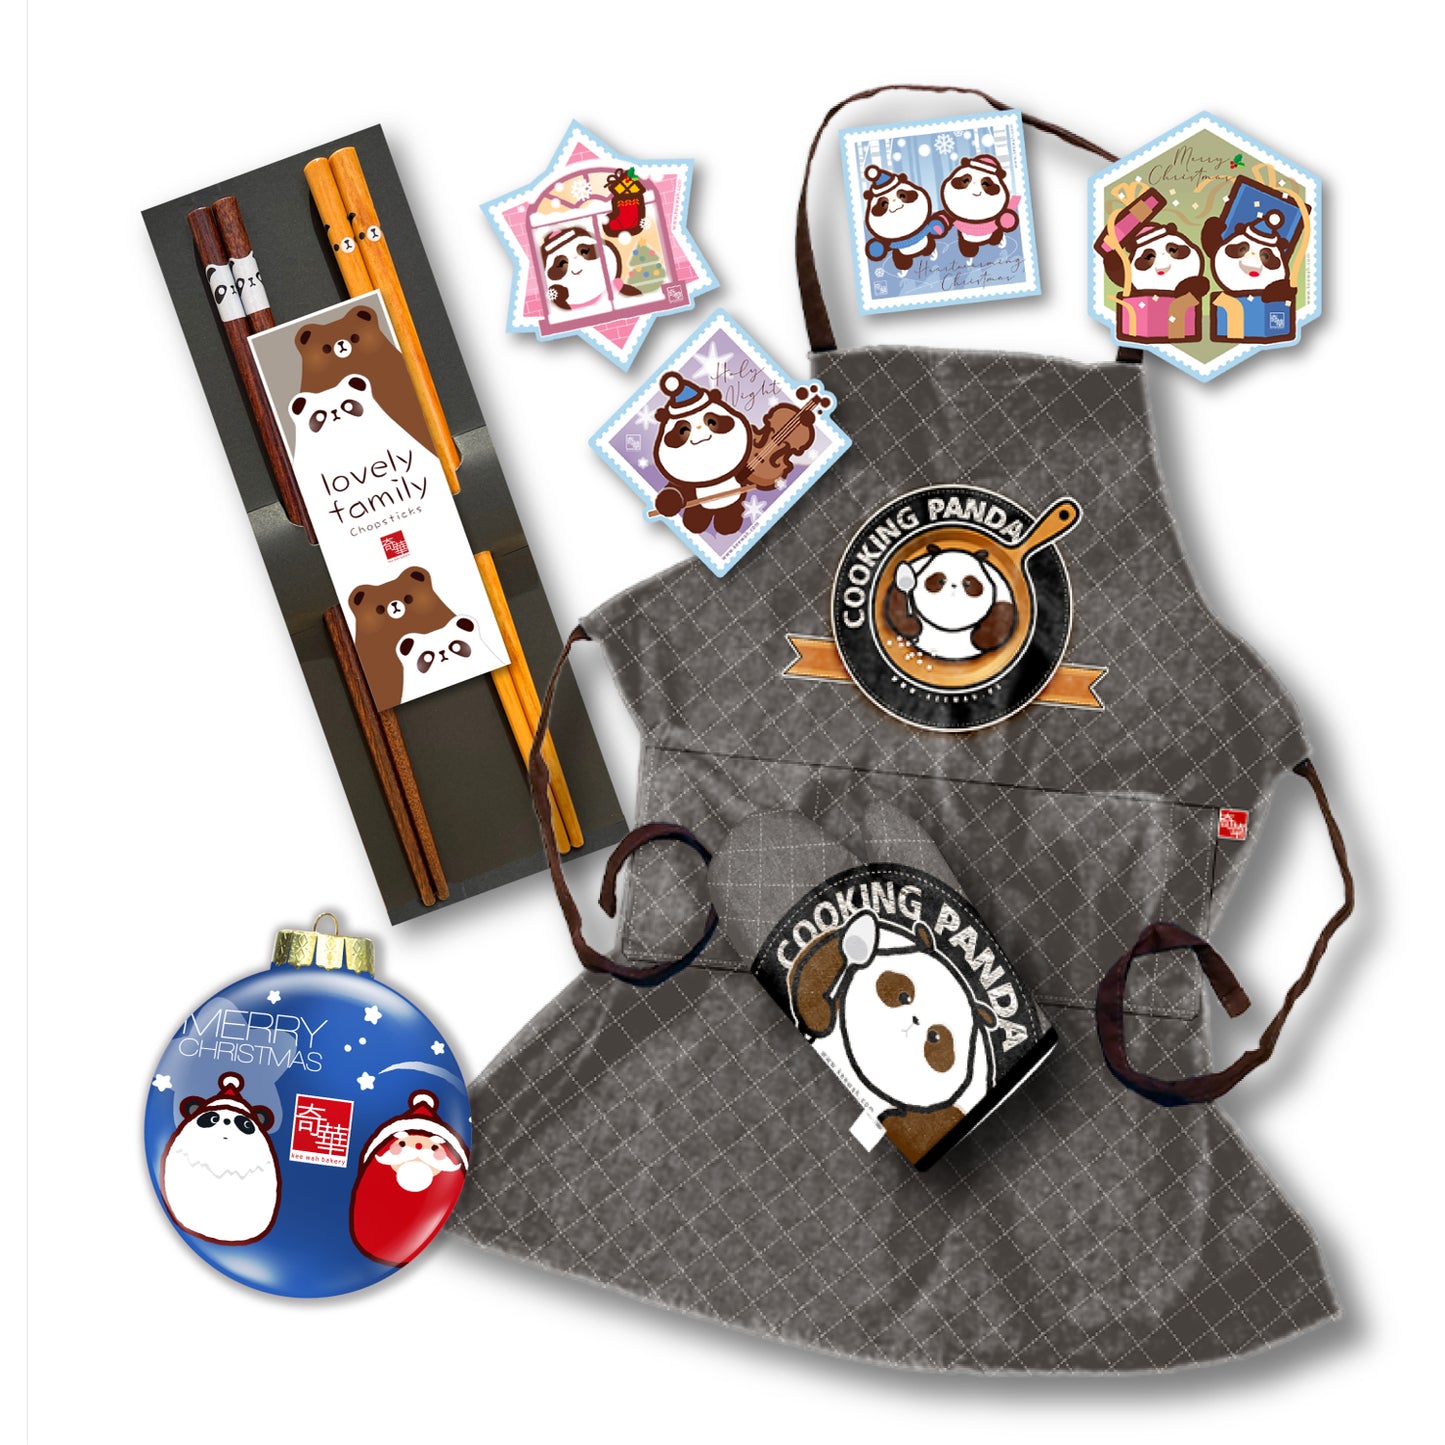 Sticker + XMAS Ornament + Chopsticks Set+ Panda Apron and Mitten - OXM1